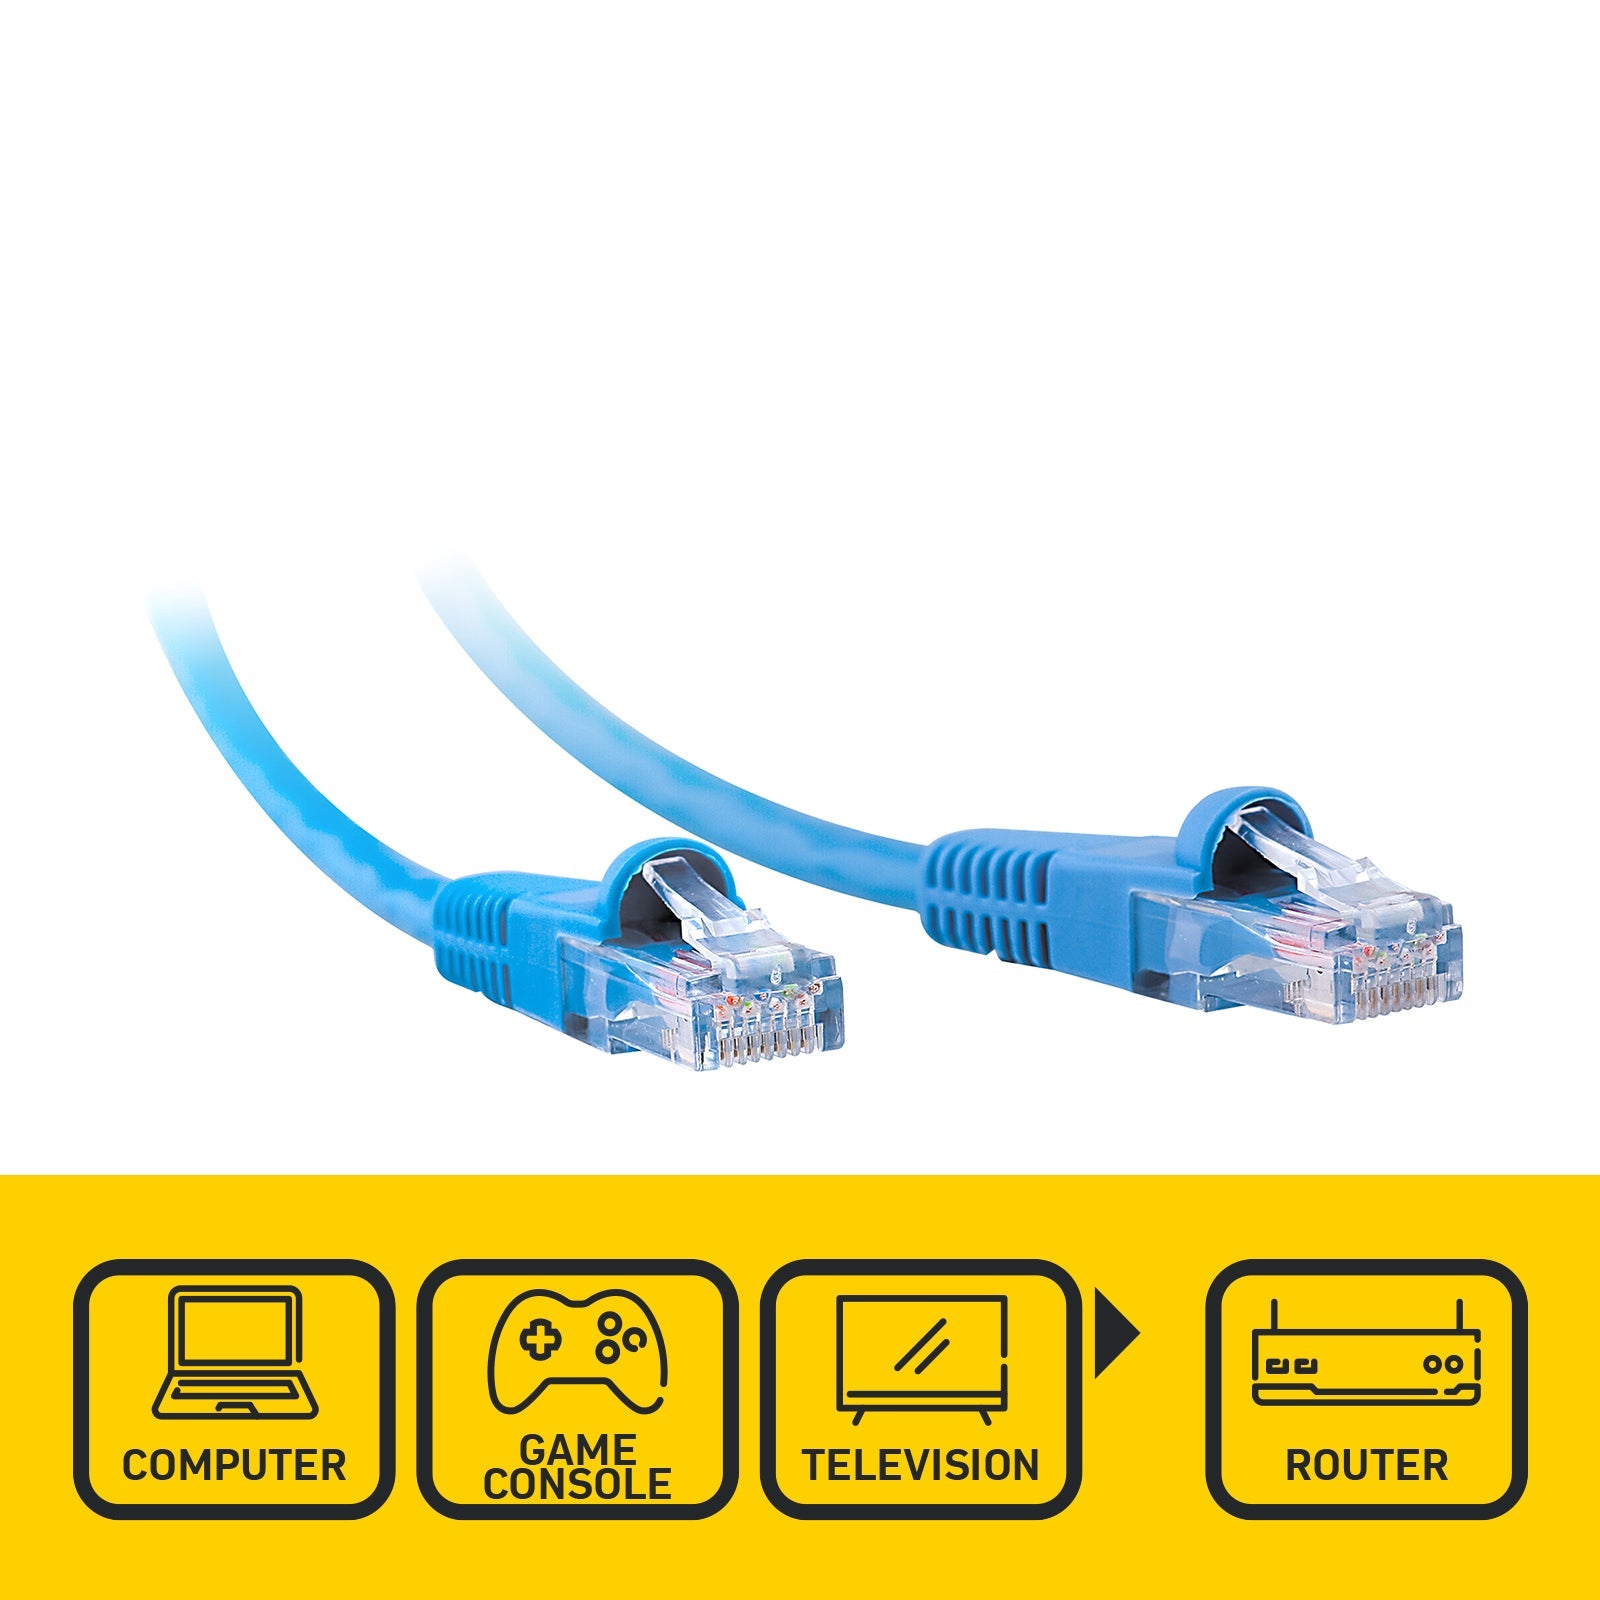 20m CAT6 RJ45 Ethernet Network Cable